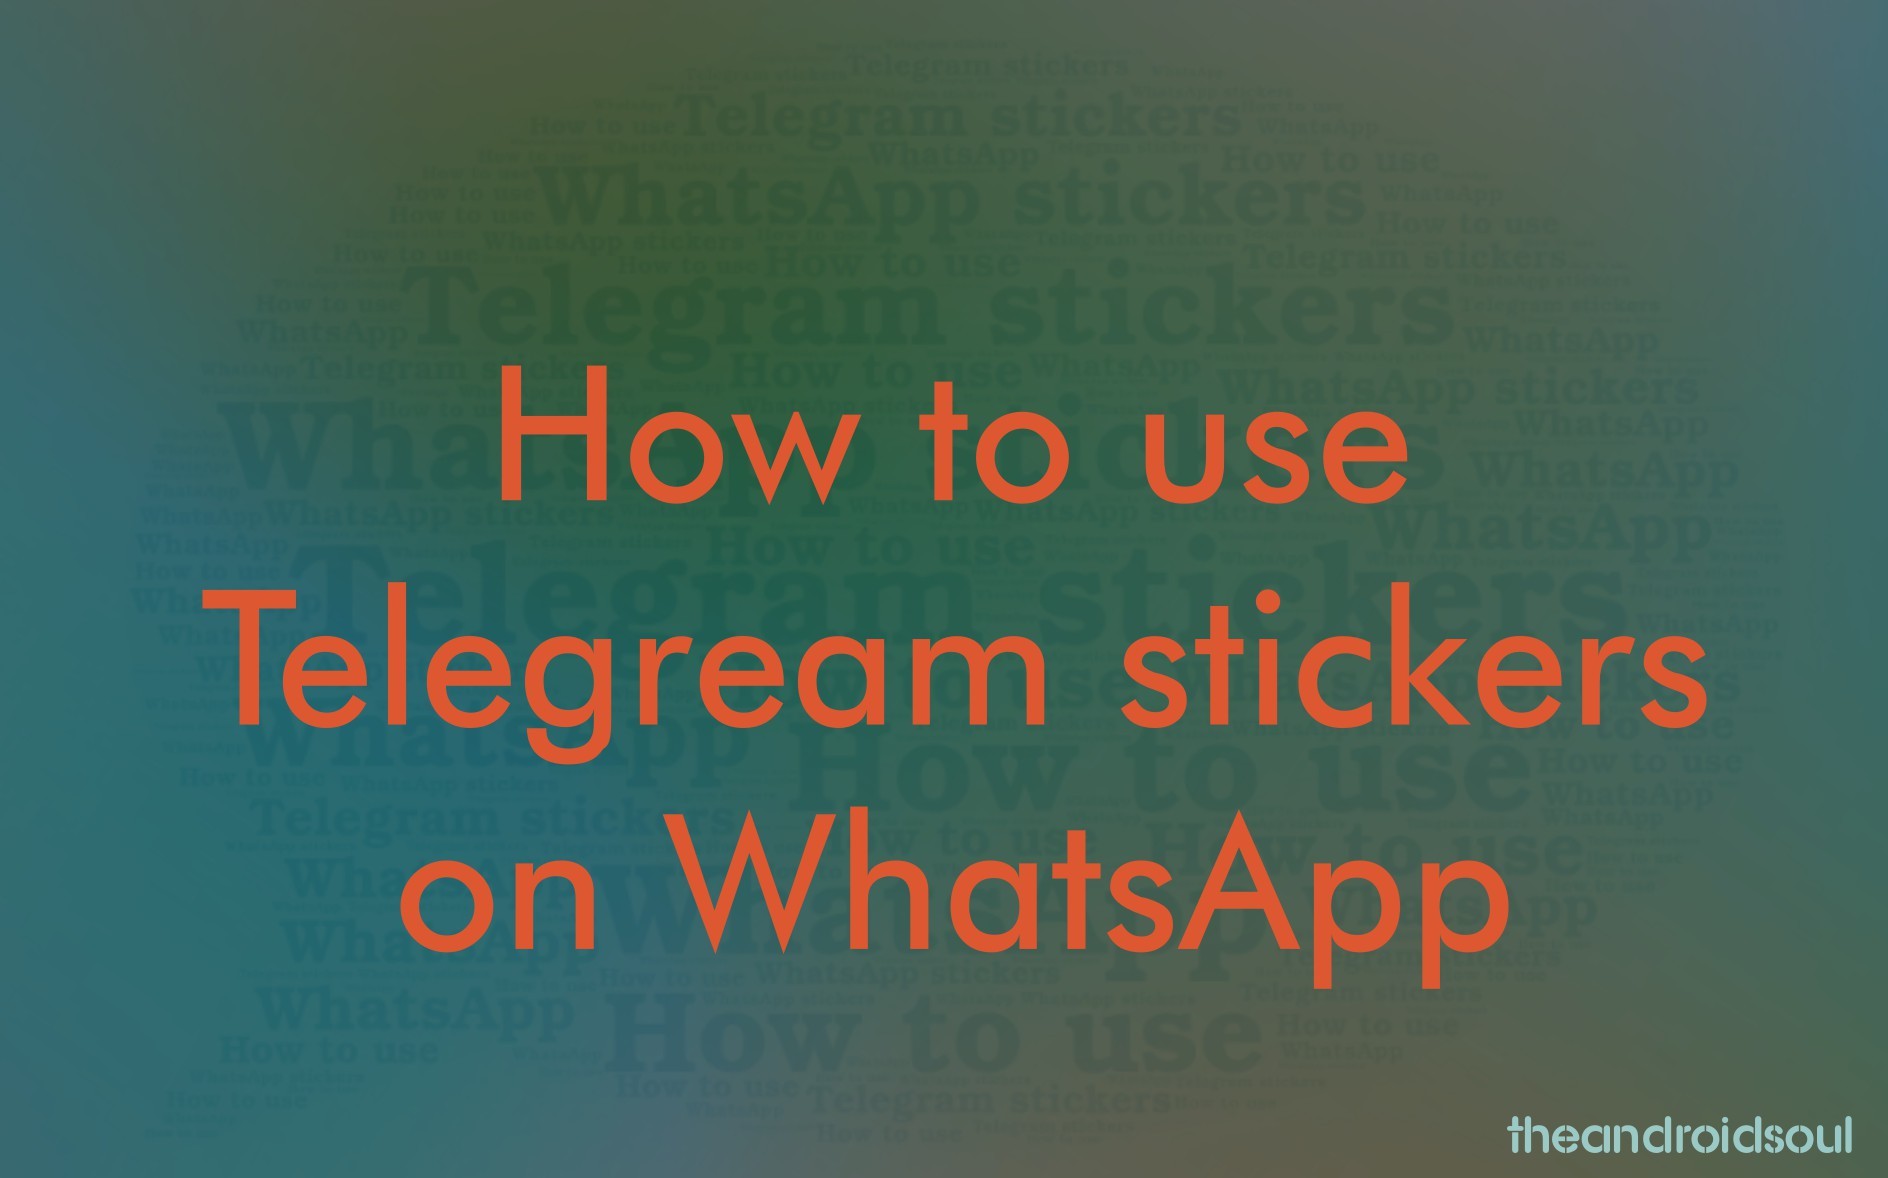 Telegram stickers on WhatsApp app